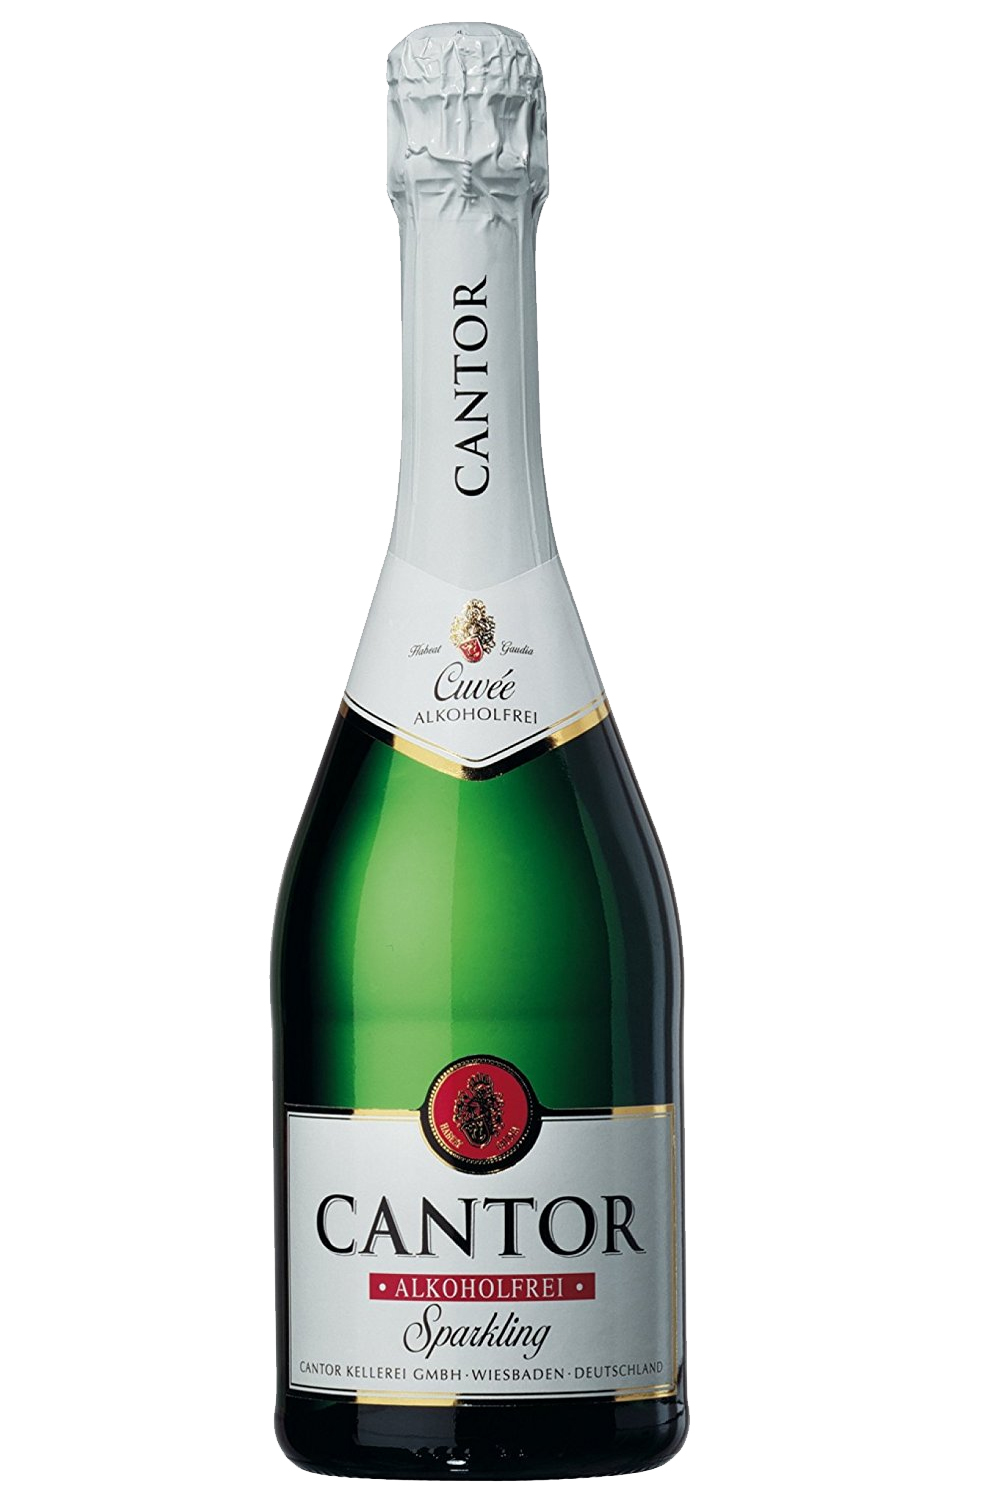 Cantor alkoholfreier Sekt 0,75 Liter - Getraenke-Handel.com ist Ihr ...